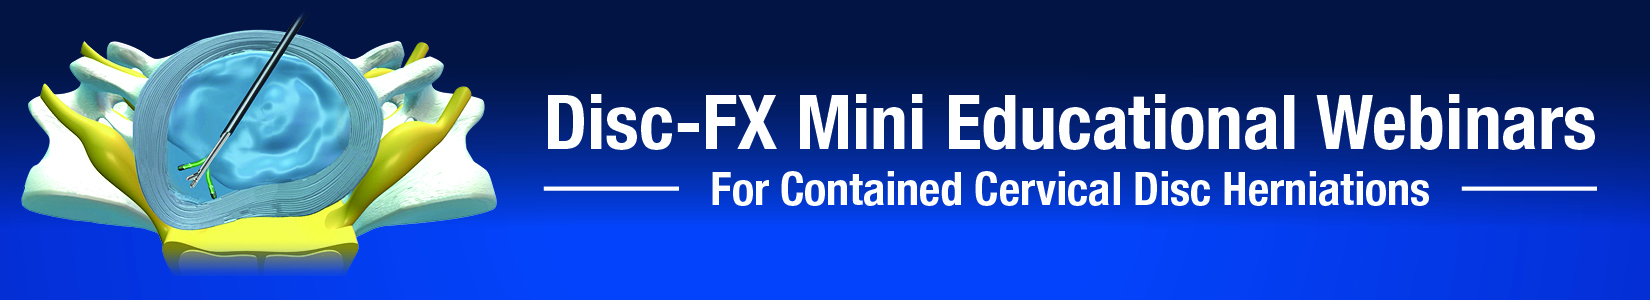 Disc-FX Mini educational Webinars